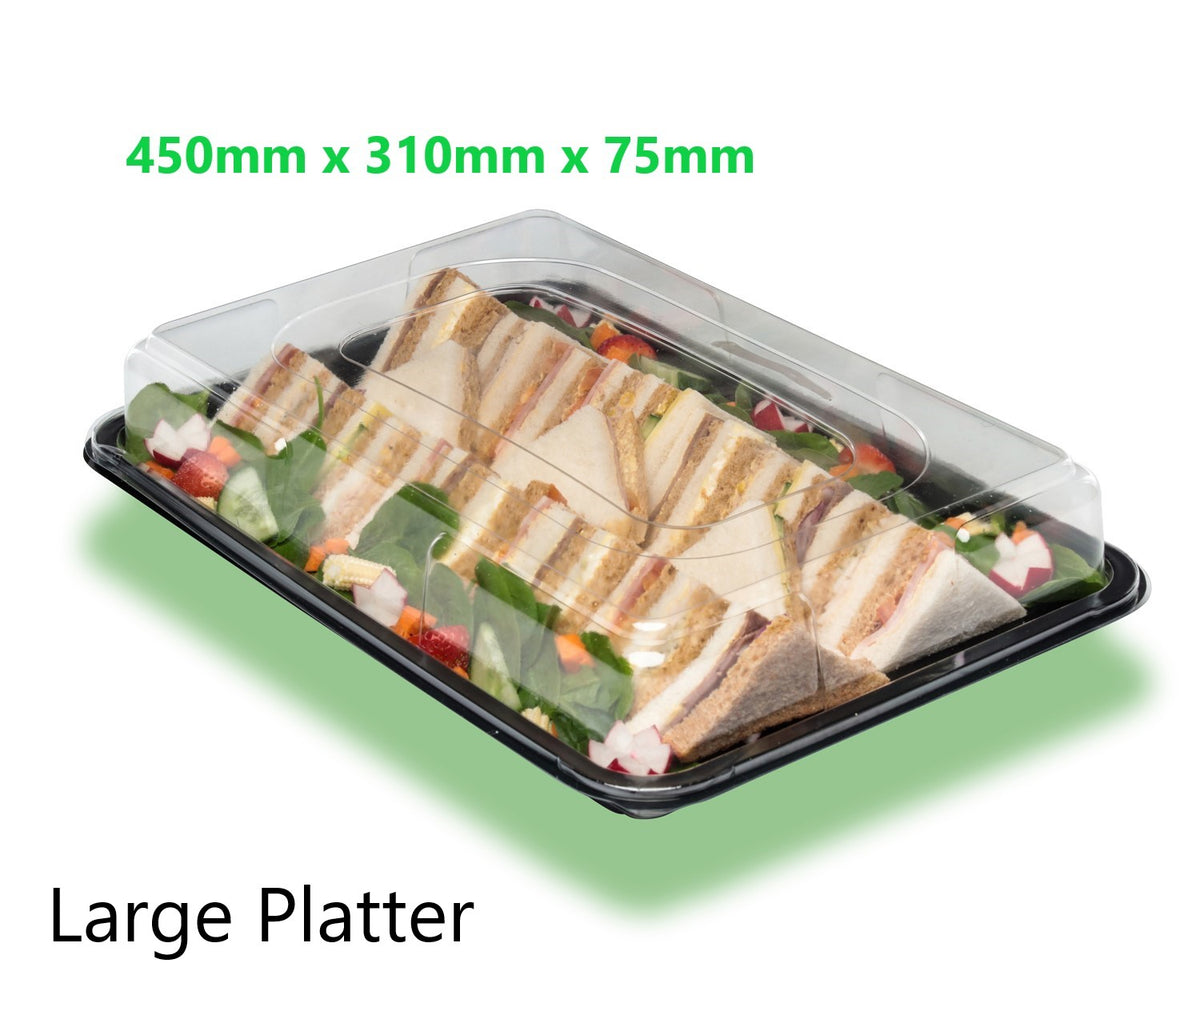 15 x Caterline Combi Best Seller Sandwich Platters with Lids (5 Large, 5 Medium, 5 Small)